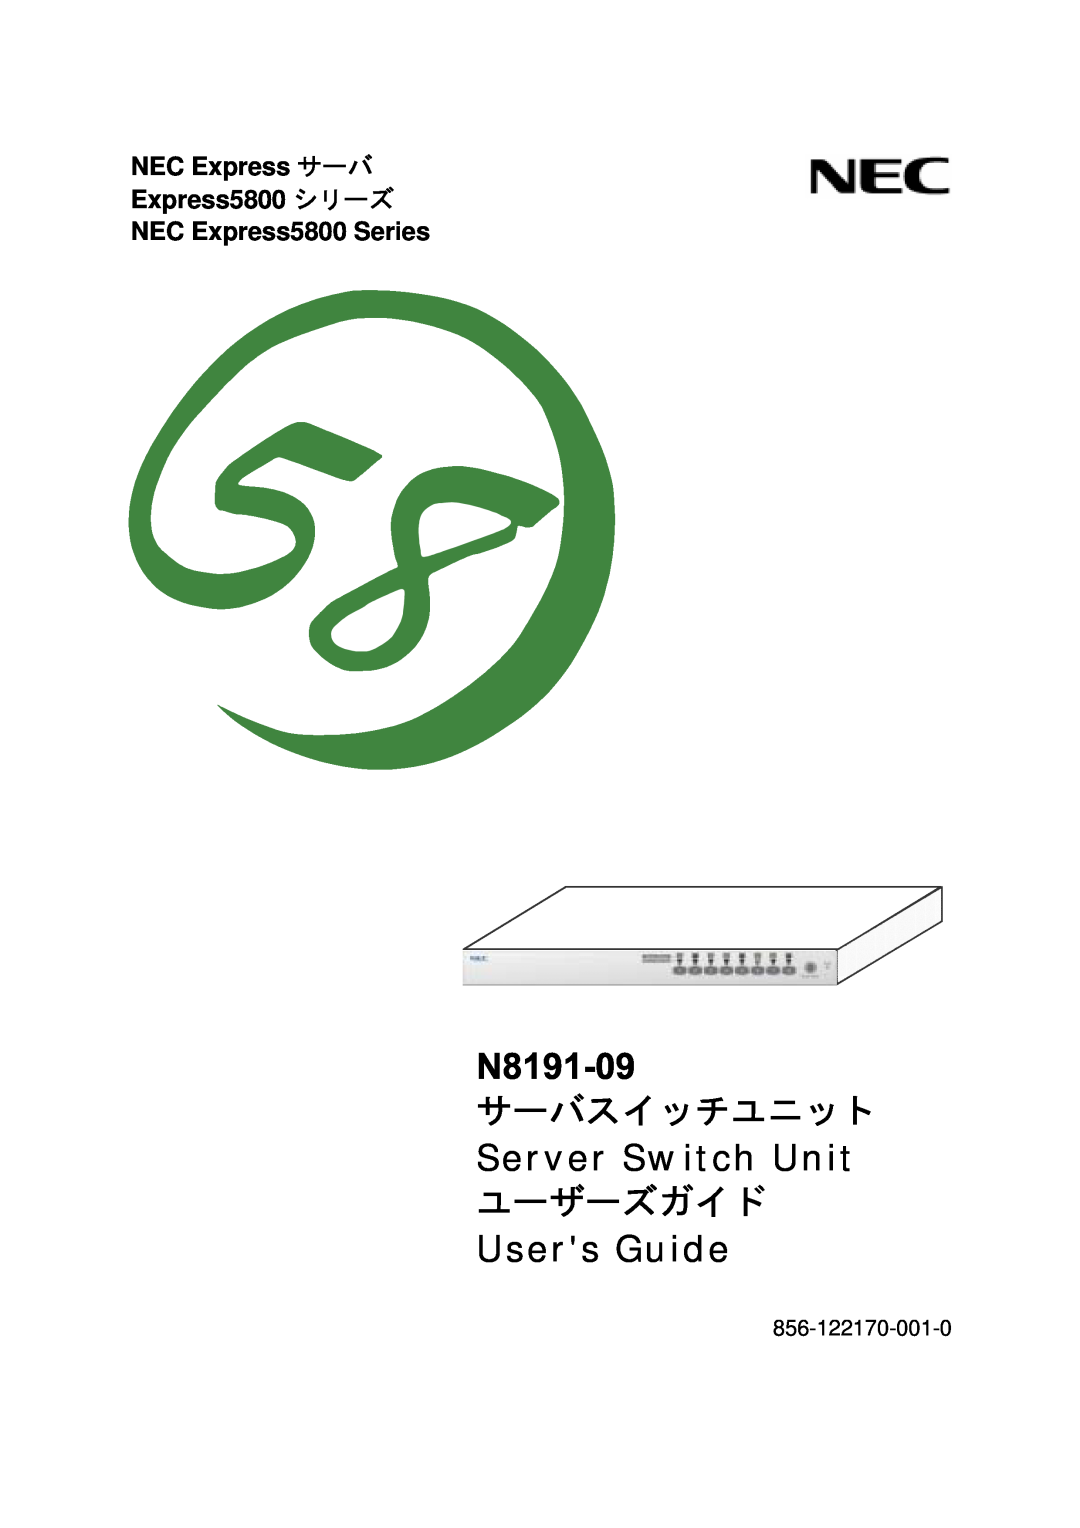 NEC N8191-09 manual サーバスイッチユニット, Server Switch Unit, ユーザーズガイド, Users Guide, 856-122170-001-0 